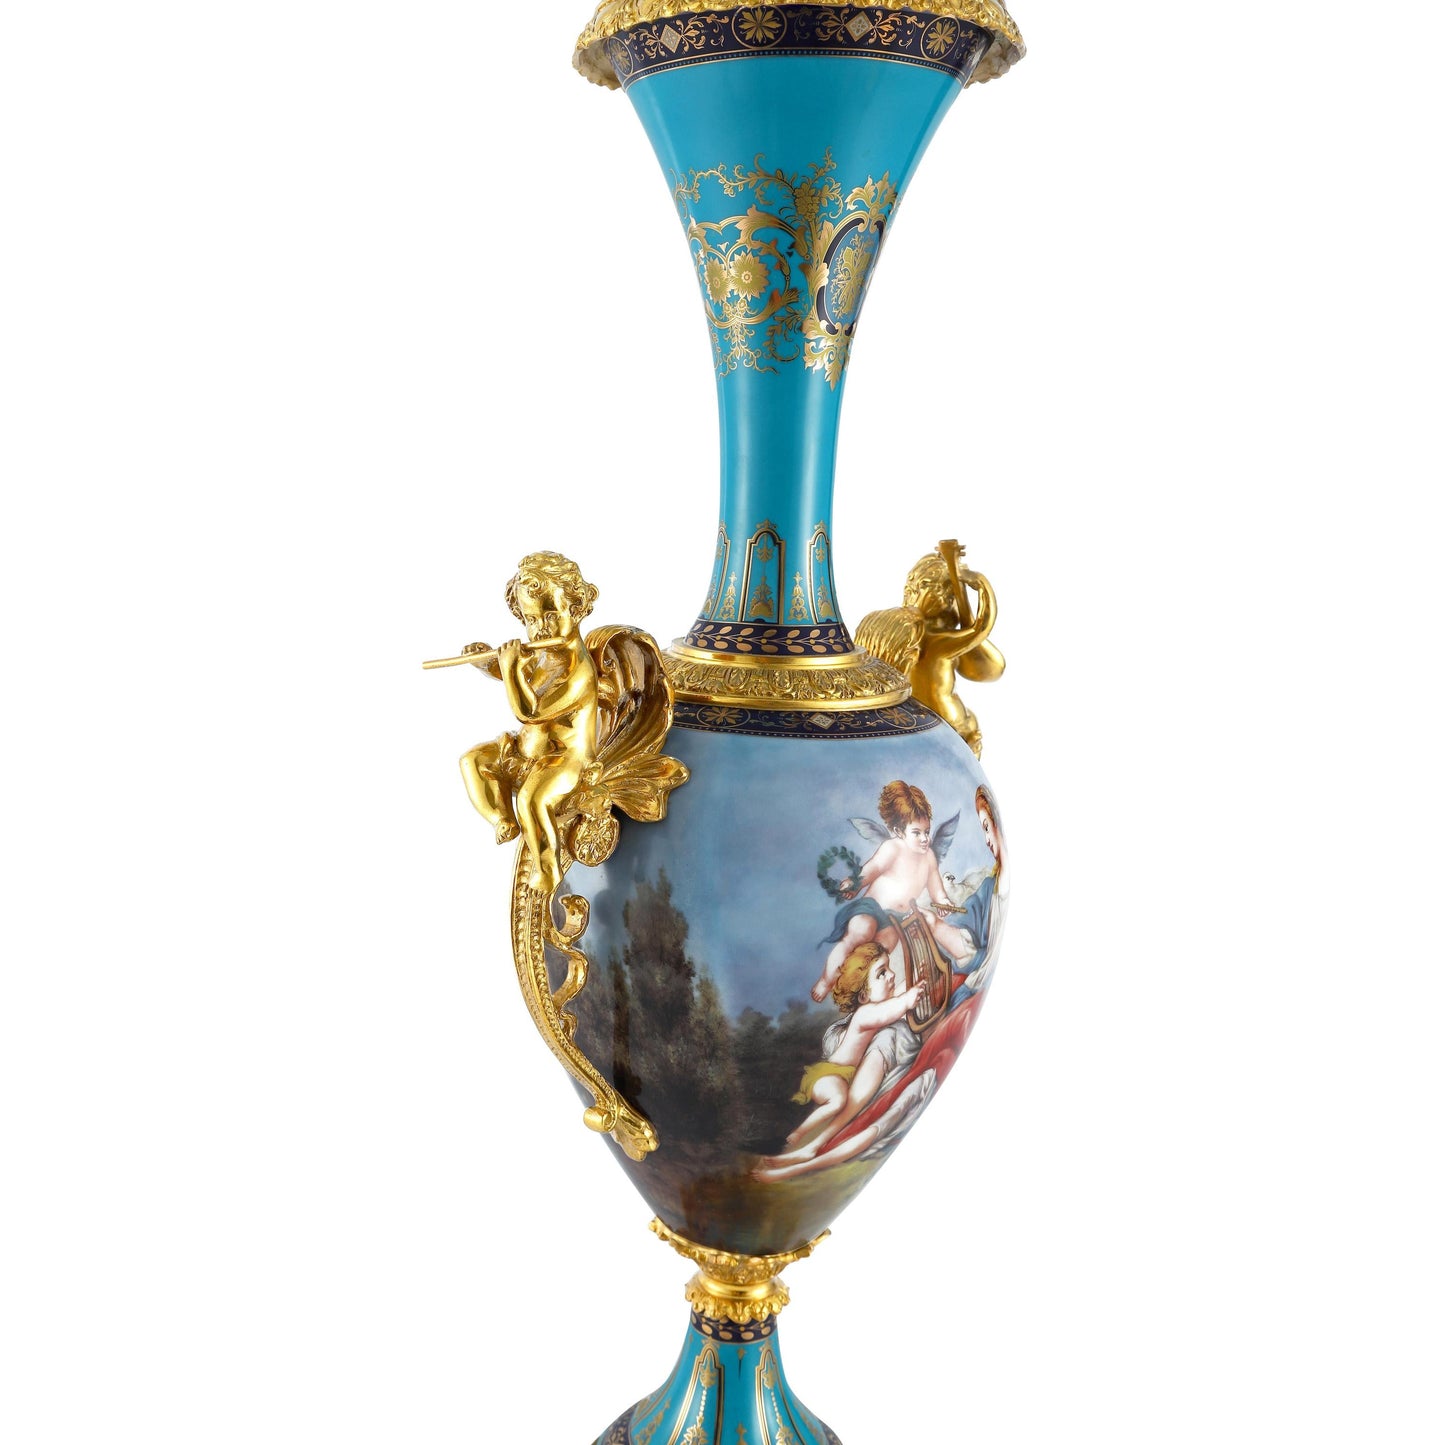 DECOELEVEN ™ Long Neck Vase with Cherub Handles